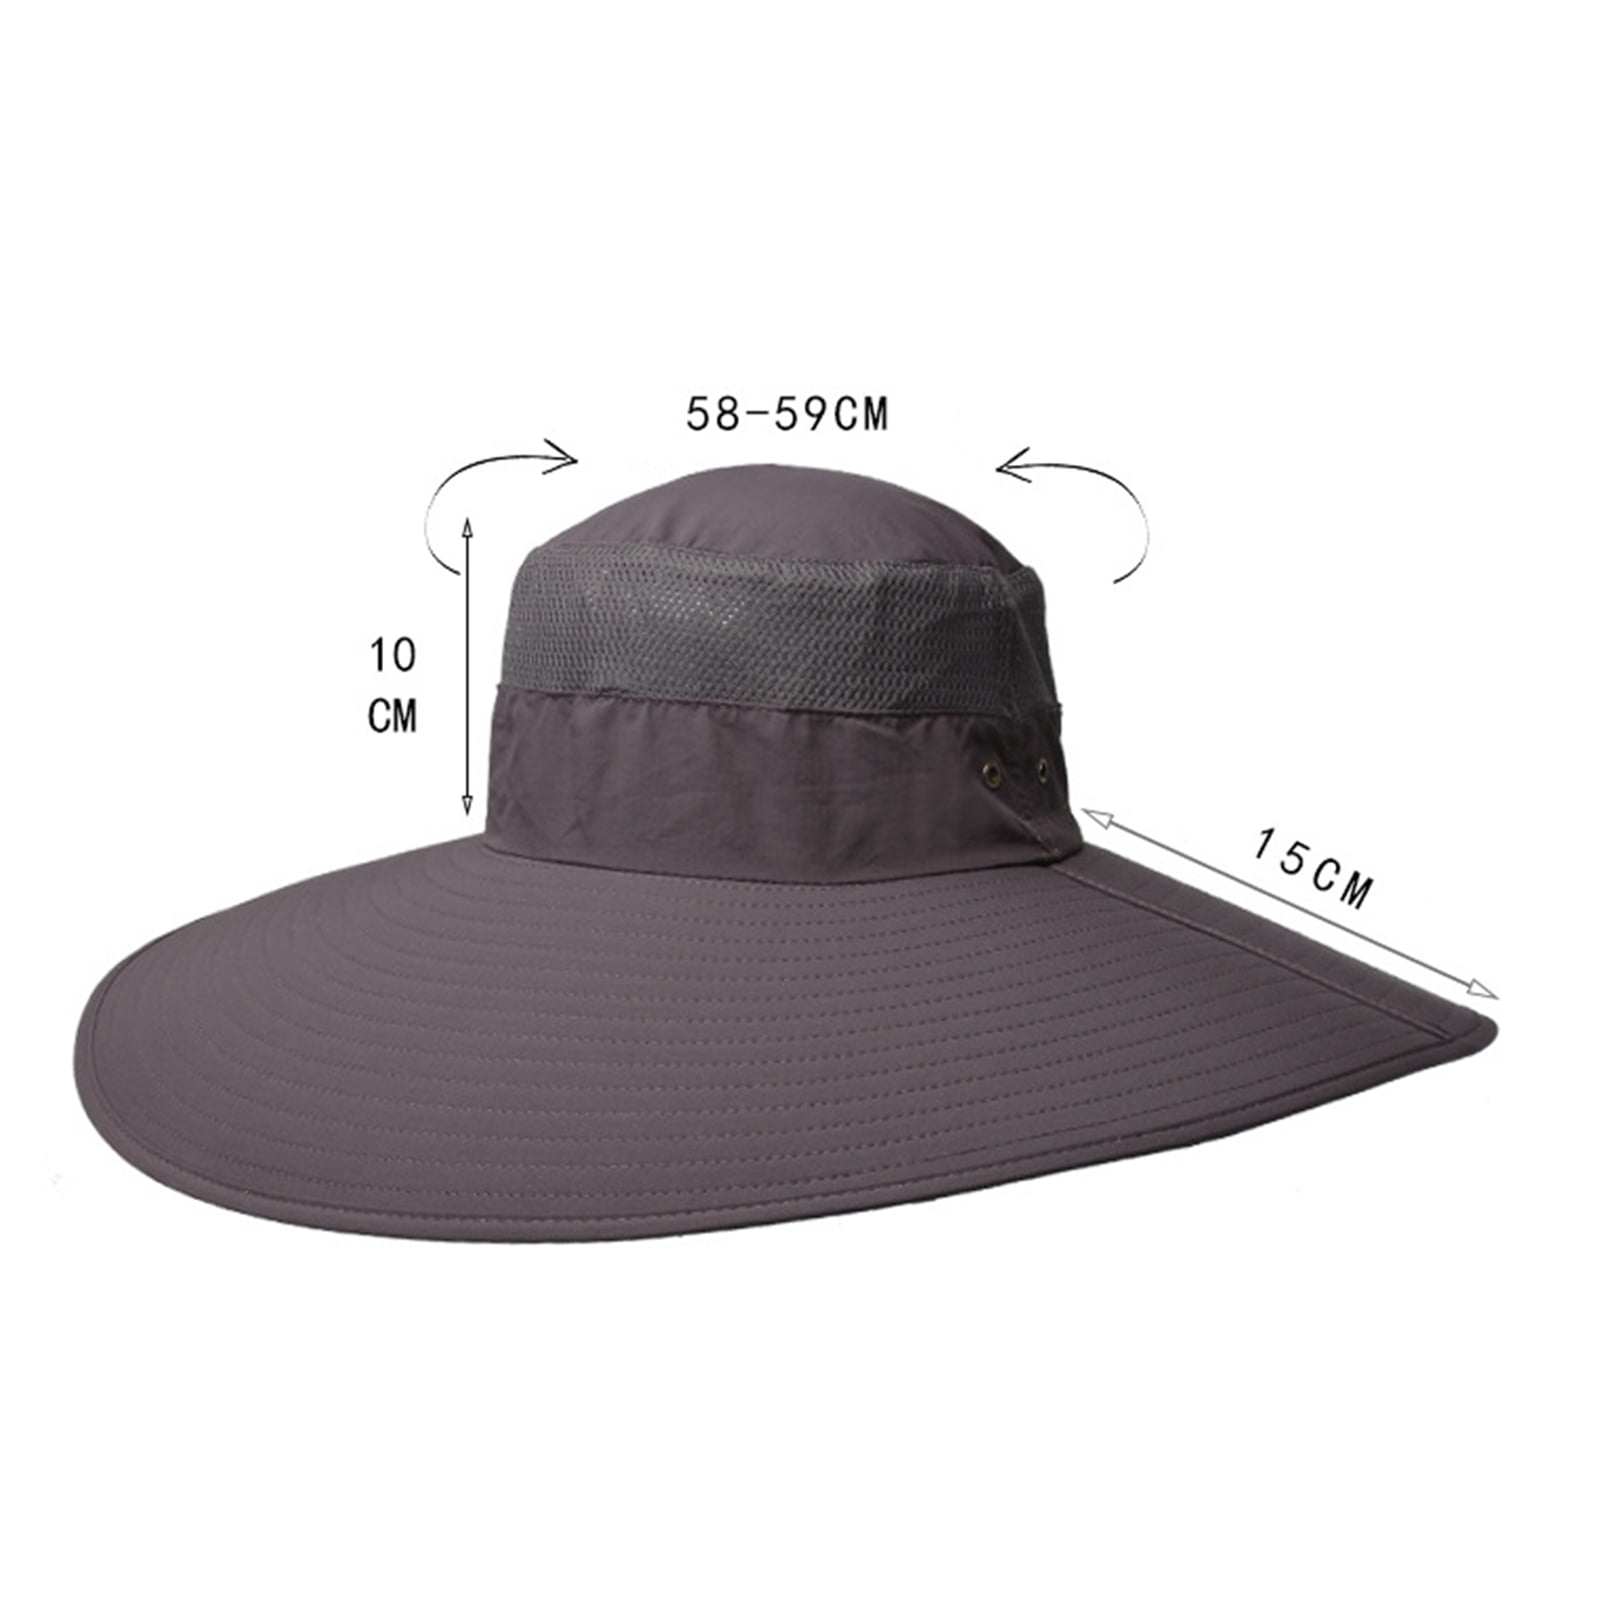  Peicees Super Wide Brim Sun Hat UPF 50+ UV Waterproof